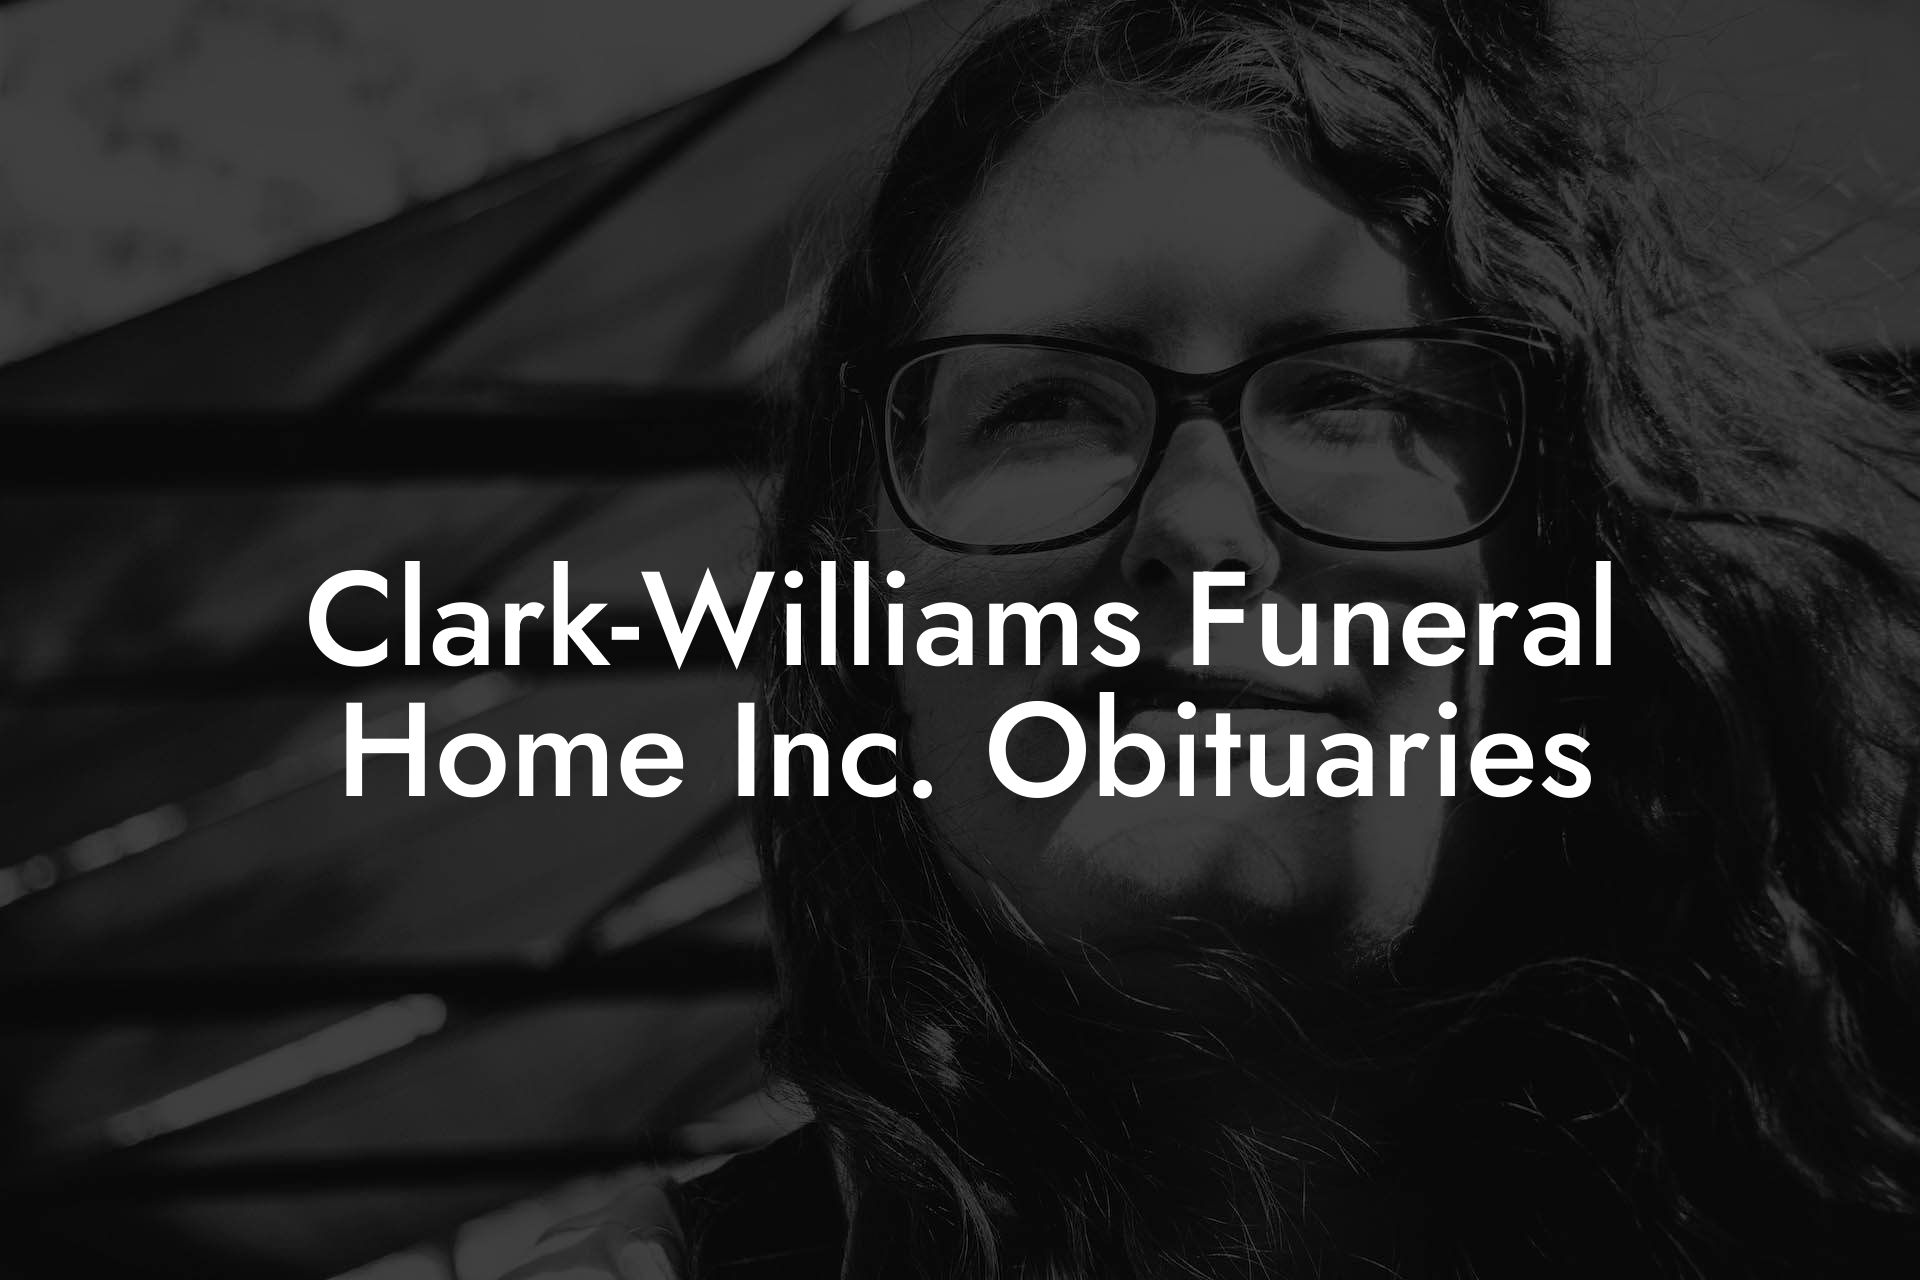 Clark-Williams Funeral Home Inc. Obituaries